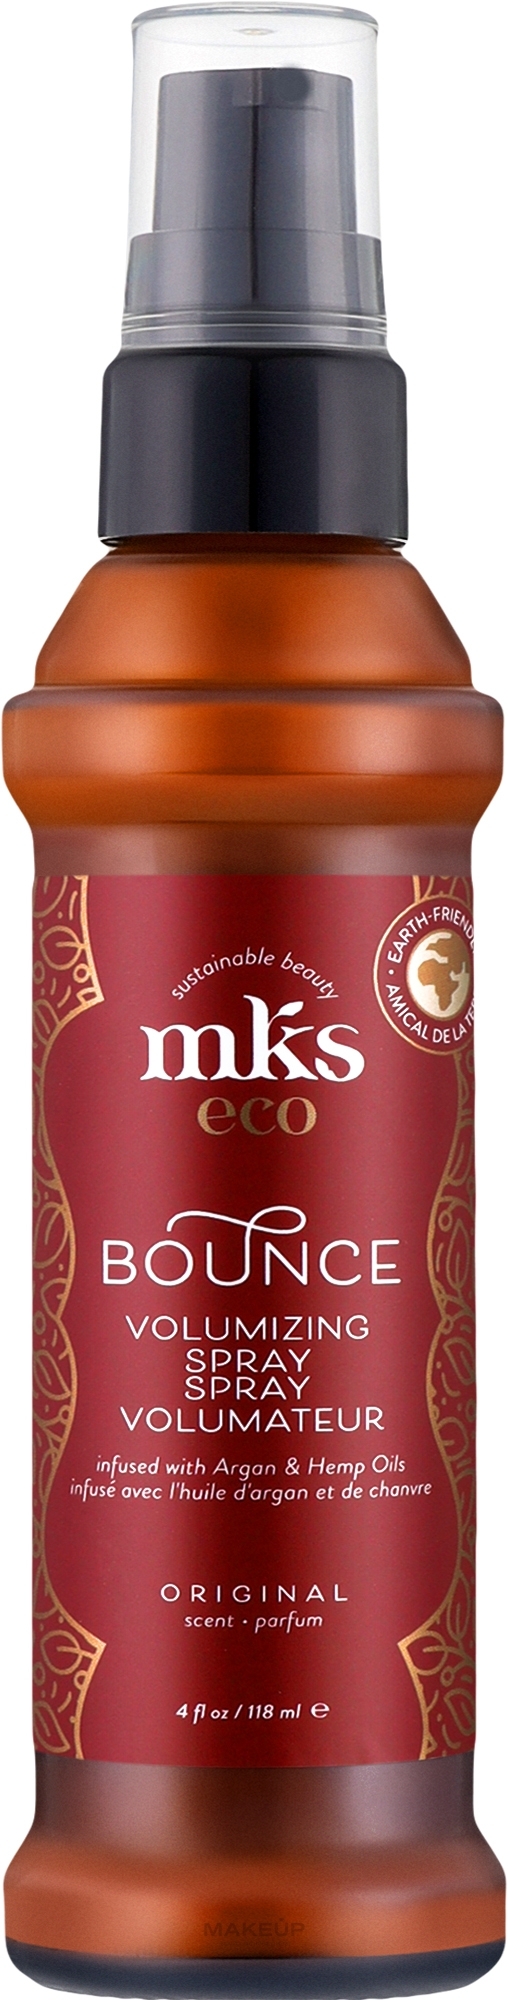 Спрей для об'єму волосся - MKS Eco Bounce Volumizing Spray Original Scent — фото 118ml